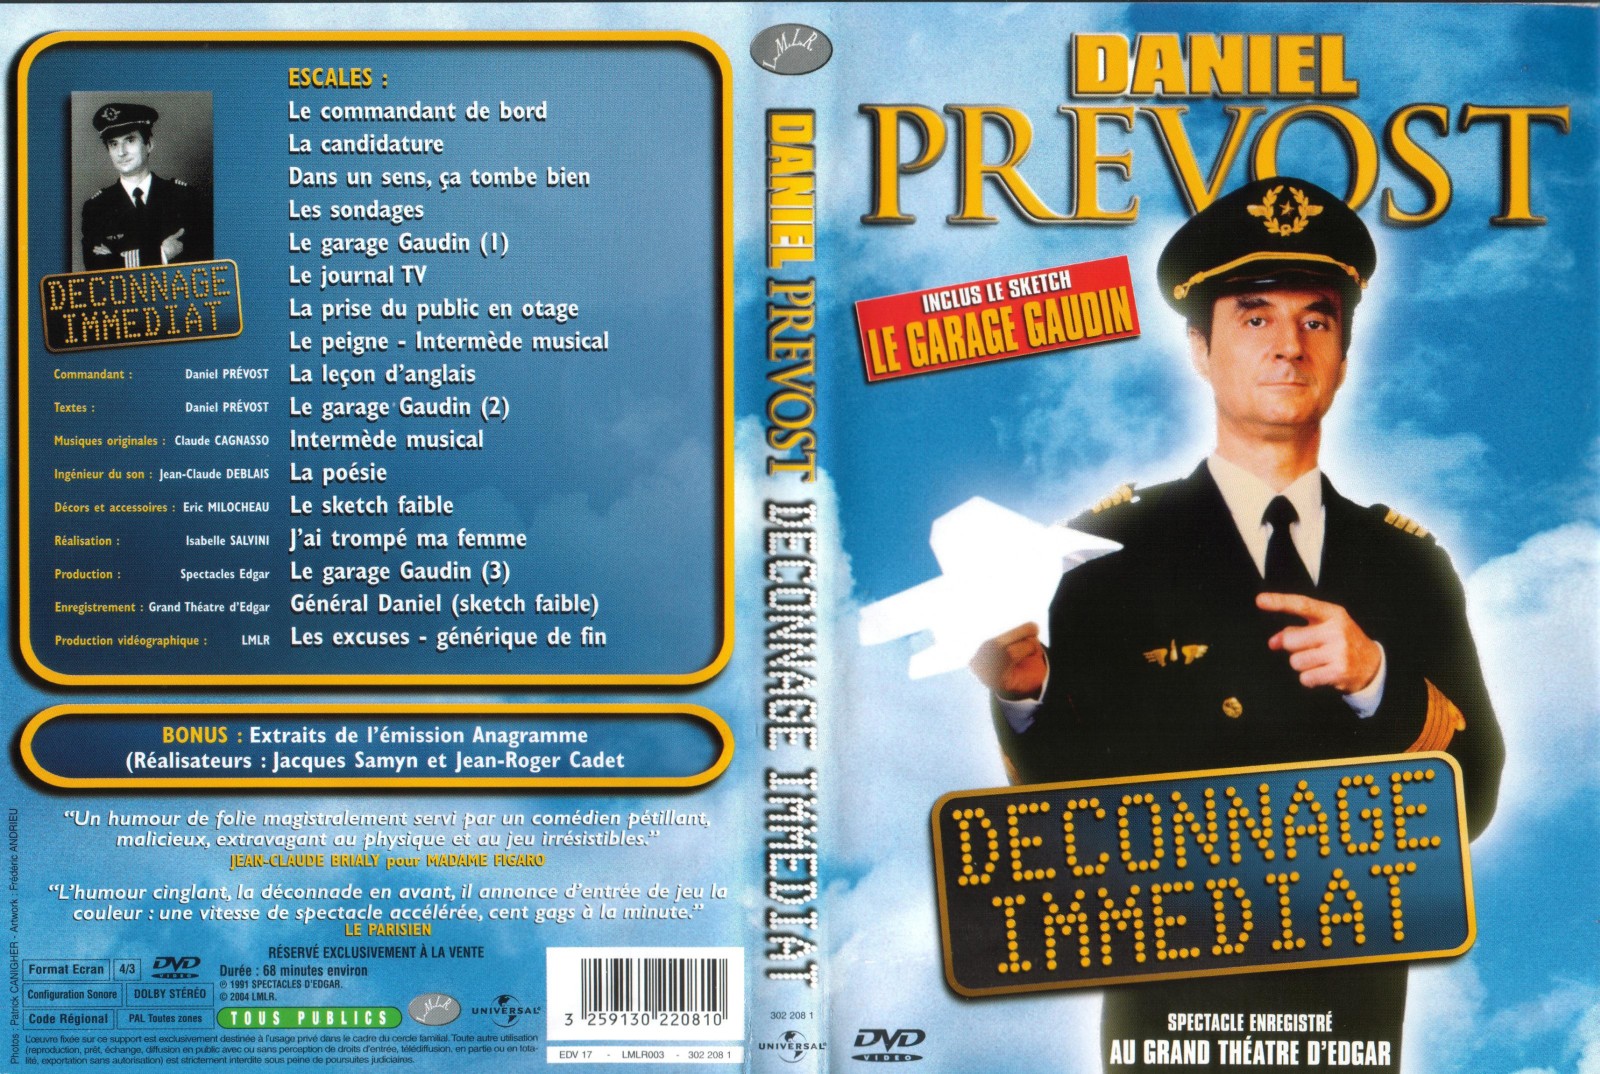 Jaquette DVD Daniel Prevost Dconnage immdiat